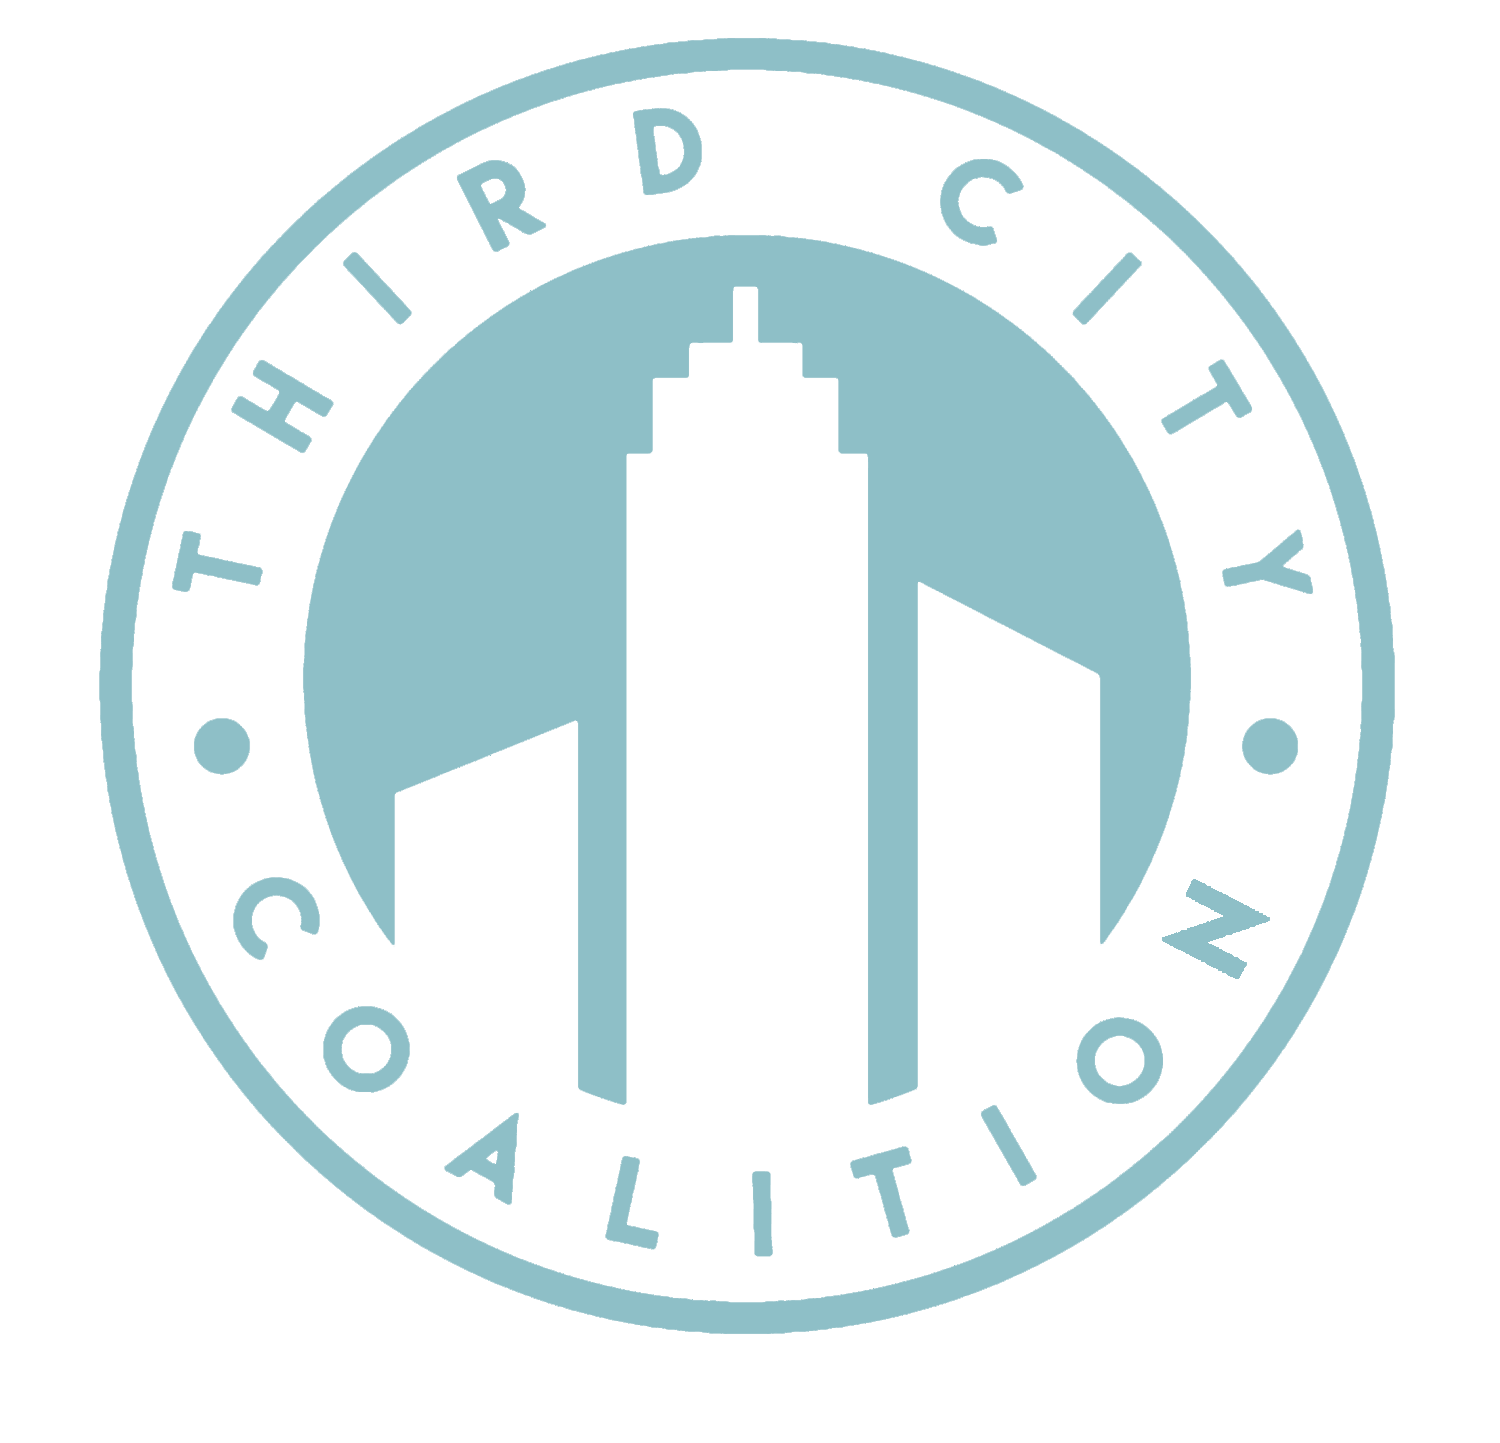 Third City Coalition